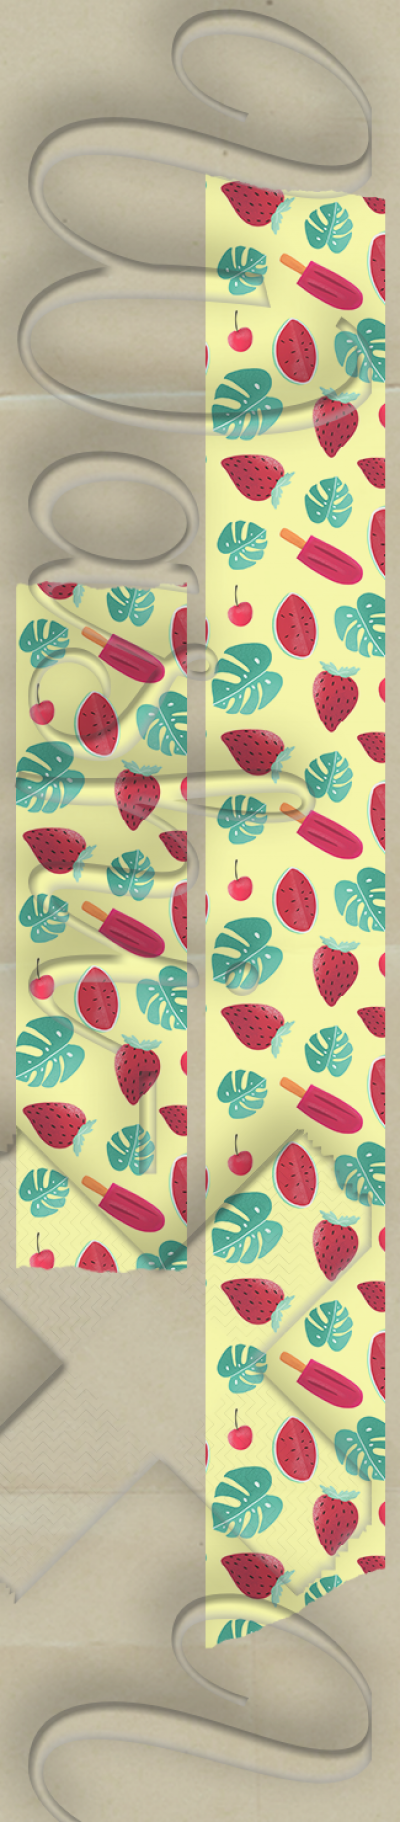 Summer patterned washi tape style 2